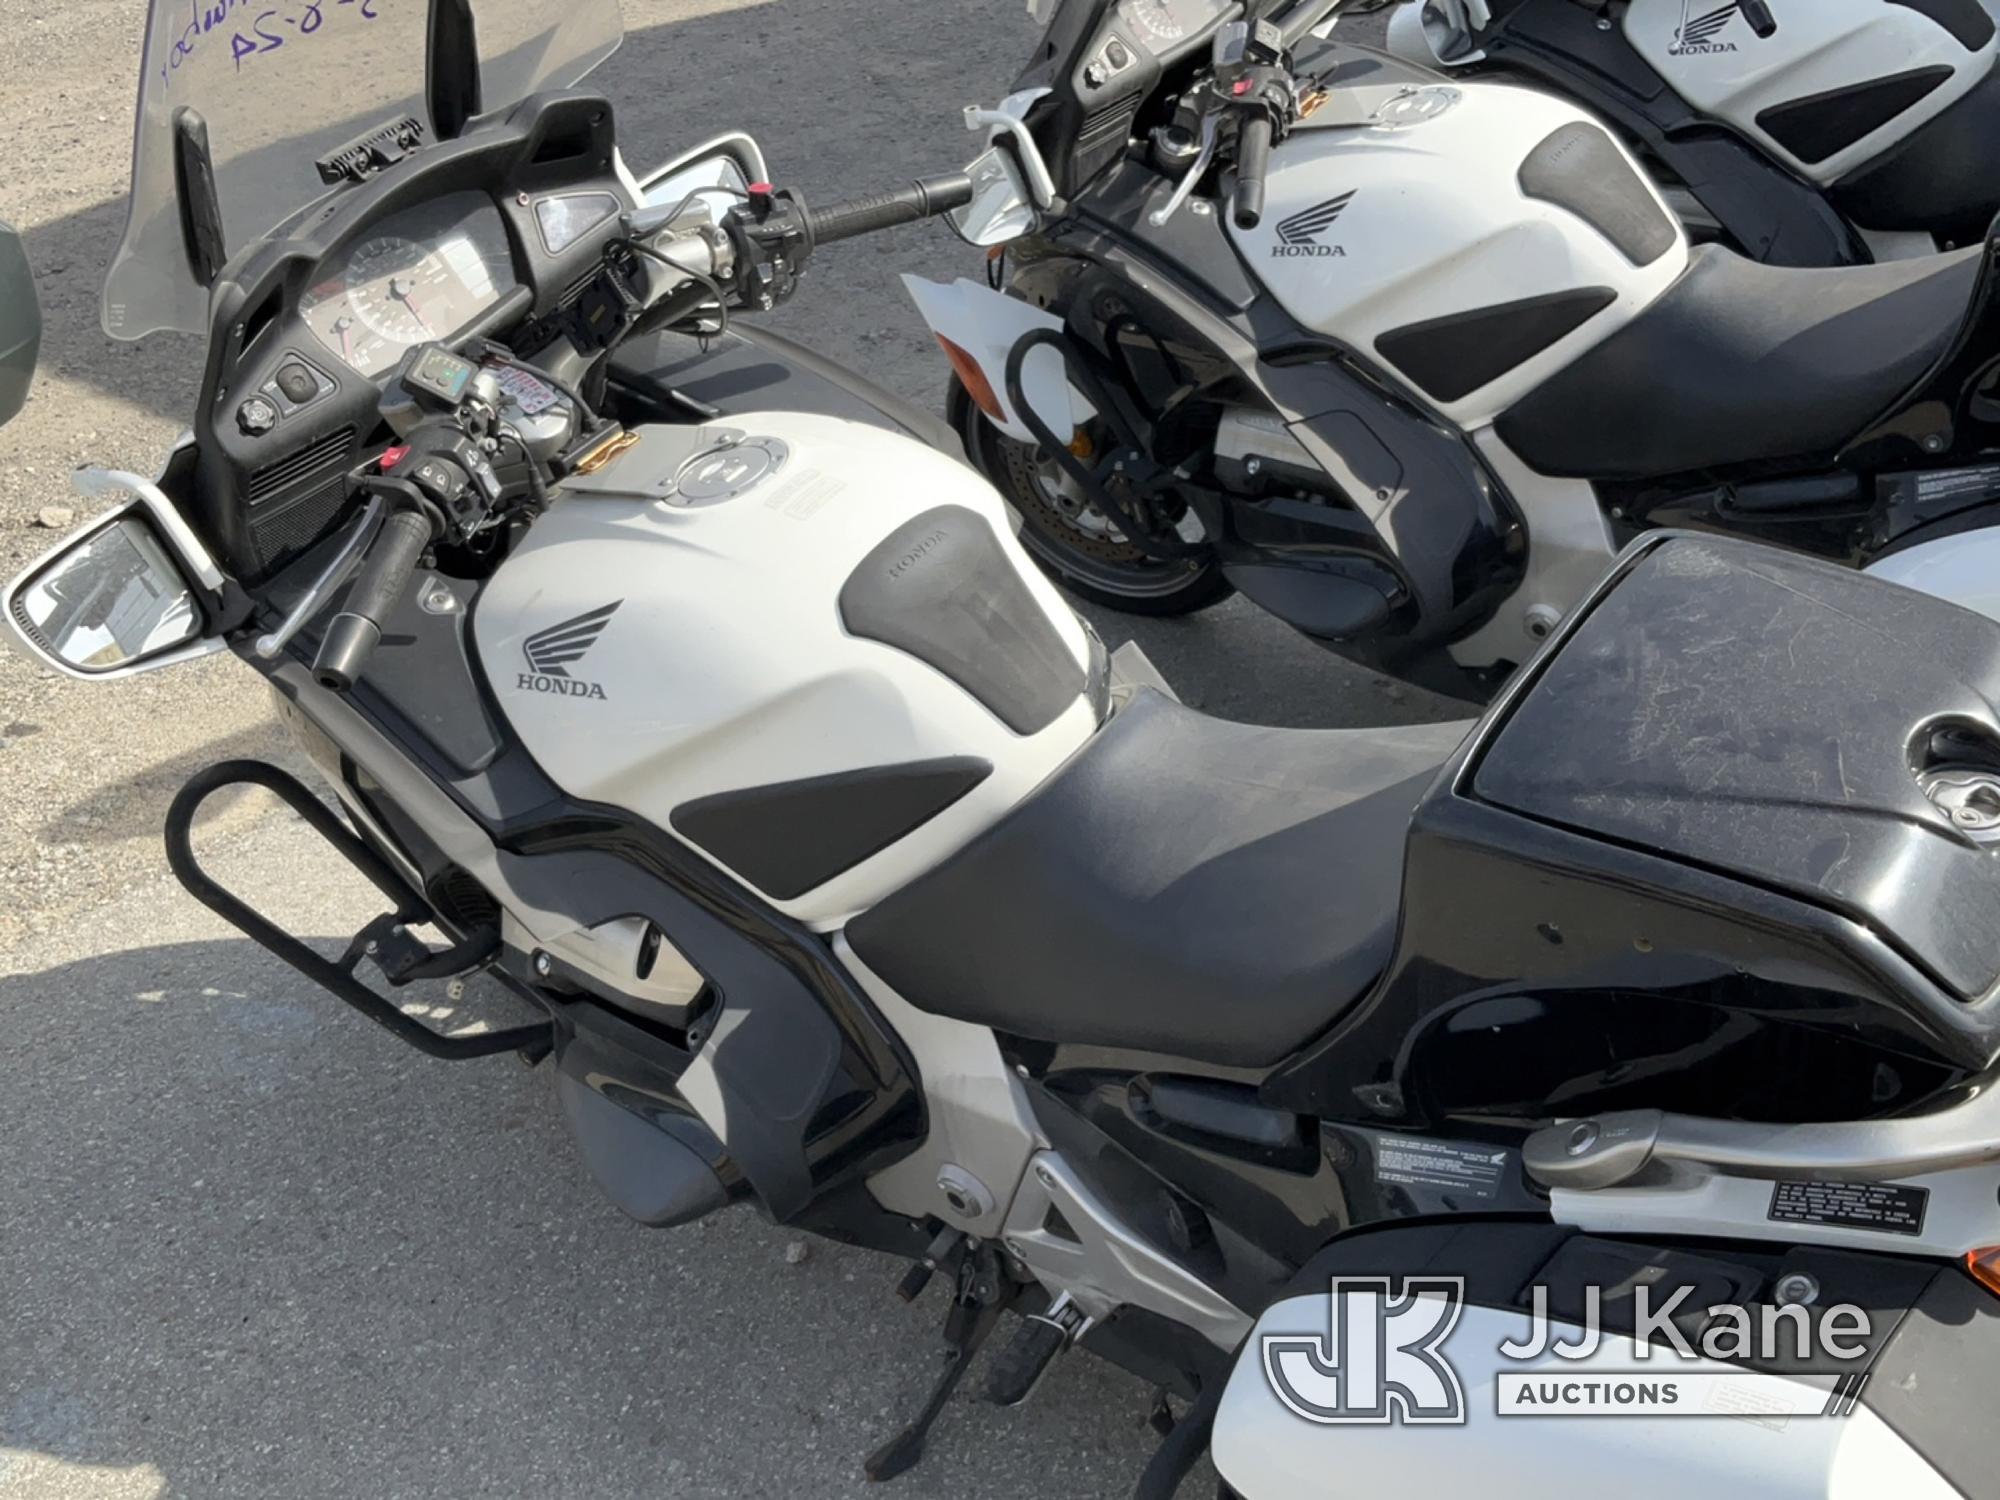 (Jurupa Valley, CA) 2015 Honda ST1300PA Motorcycle Runs & Moves, ABS Light Is On